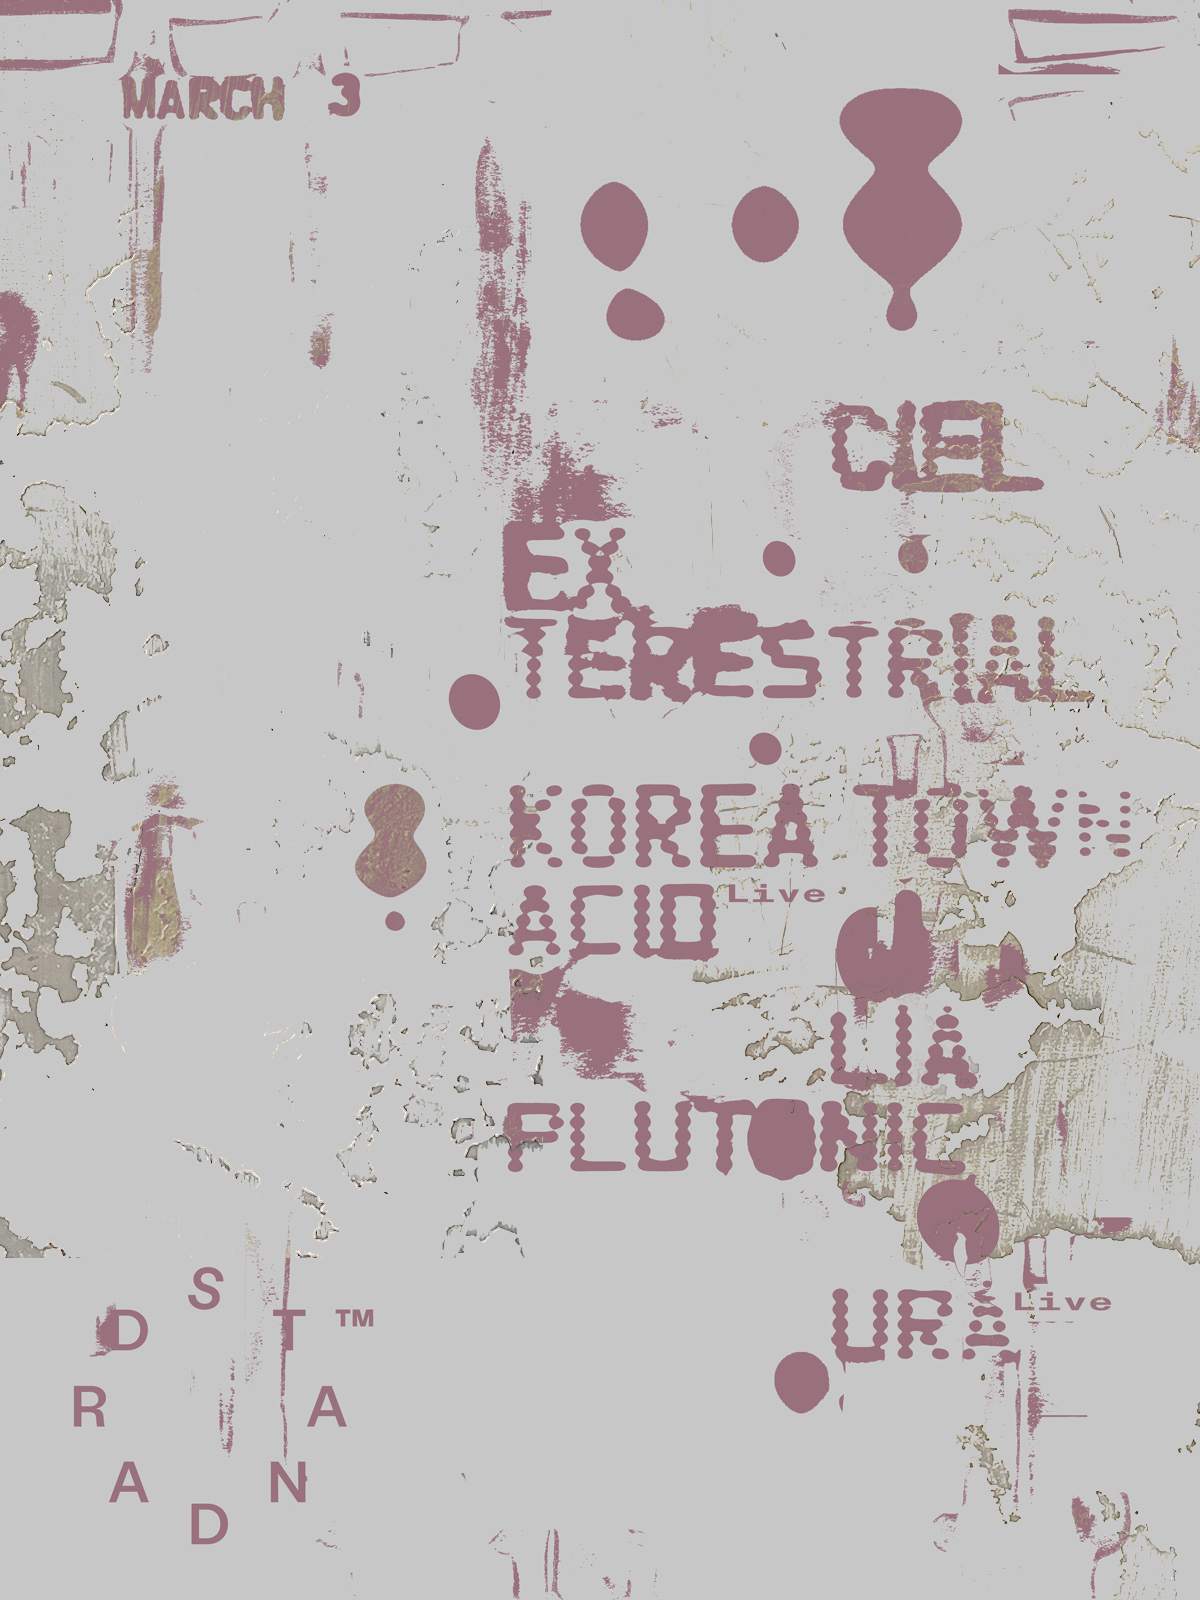 016 ex terrestrial, Ciel, URA, Lia Plutonic and Korea Town Acid - フライヤー表